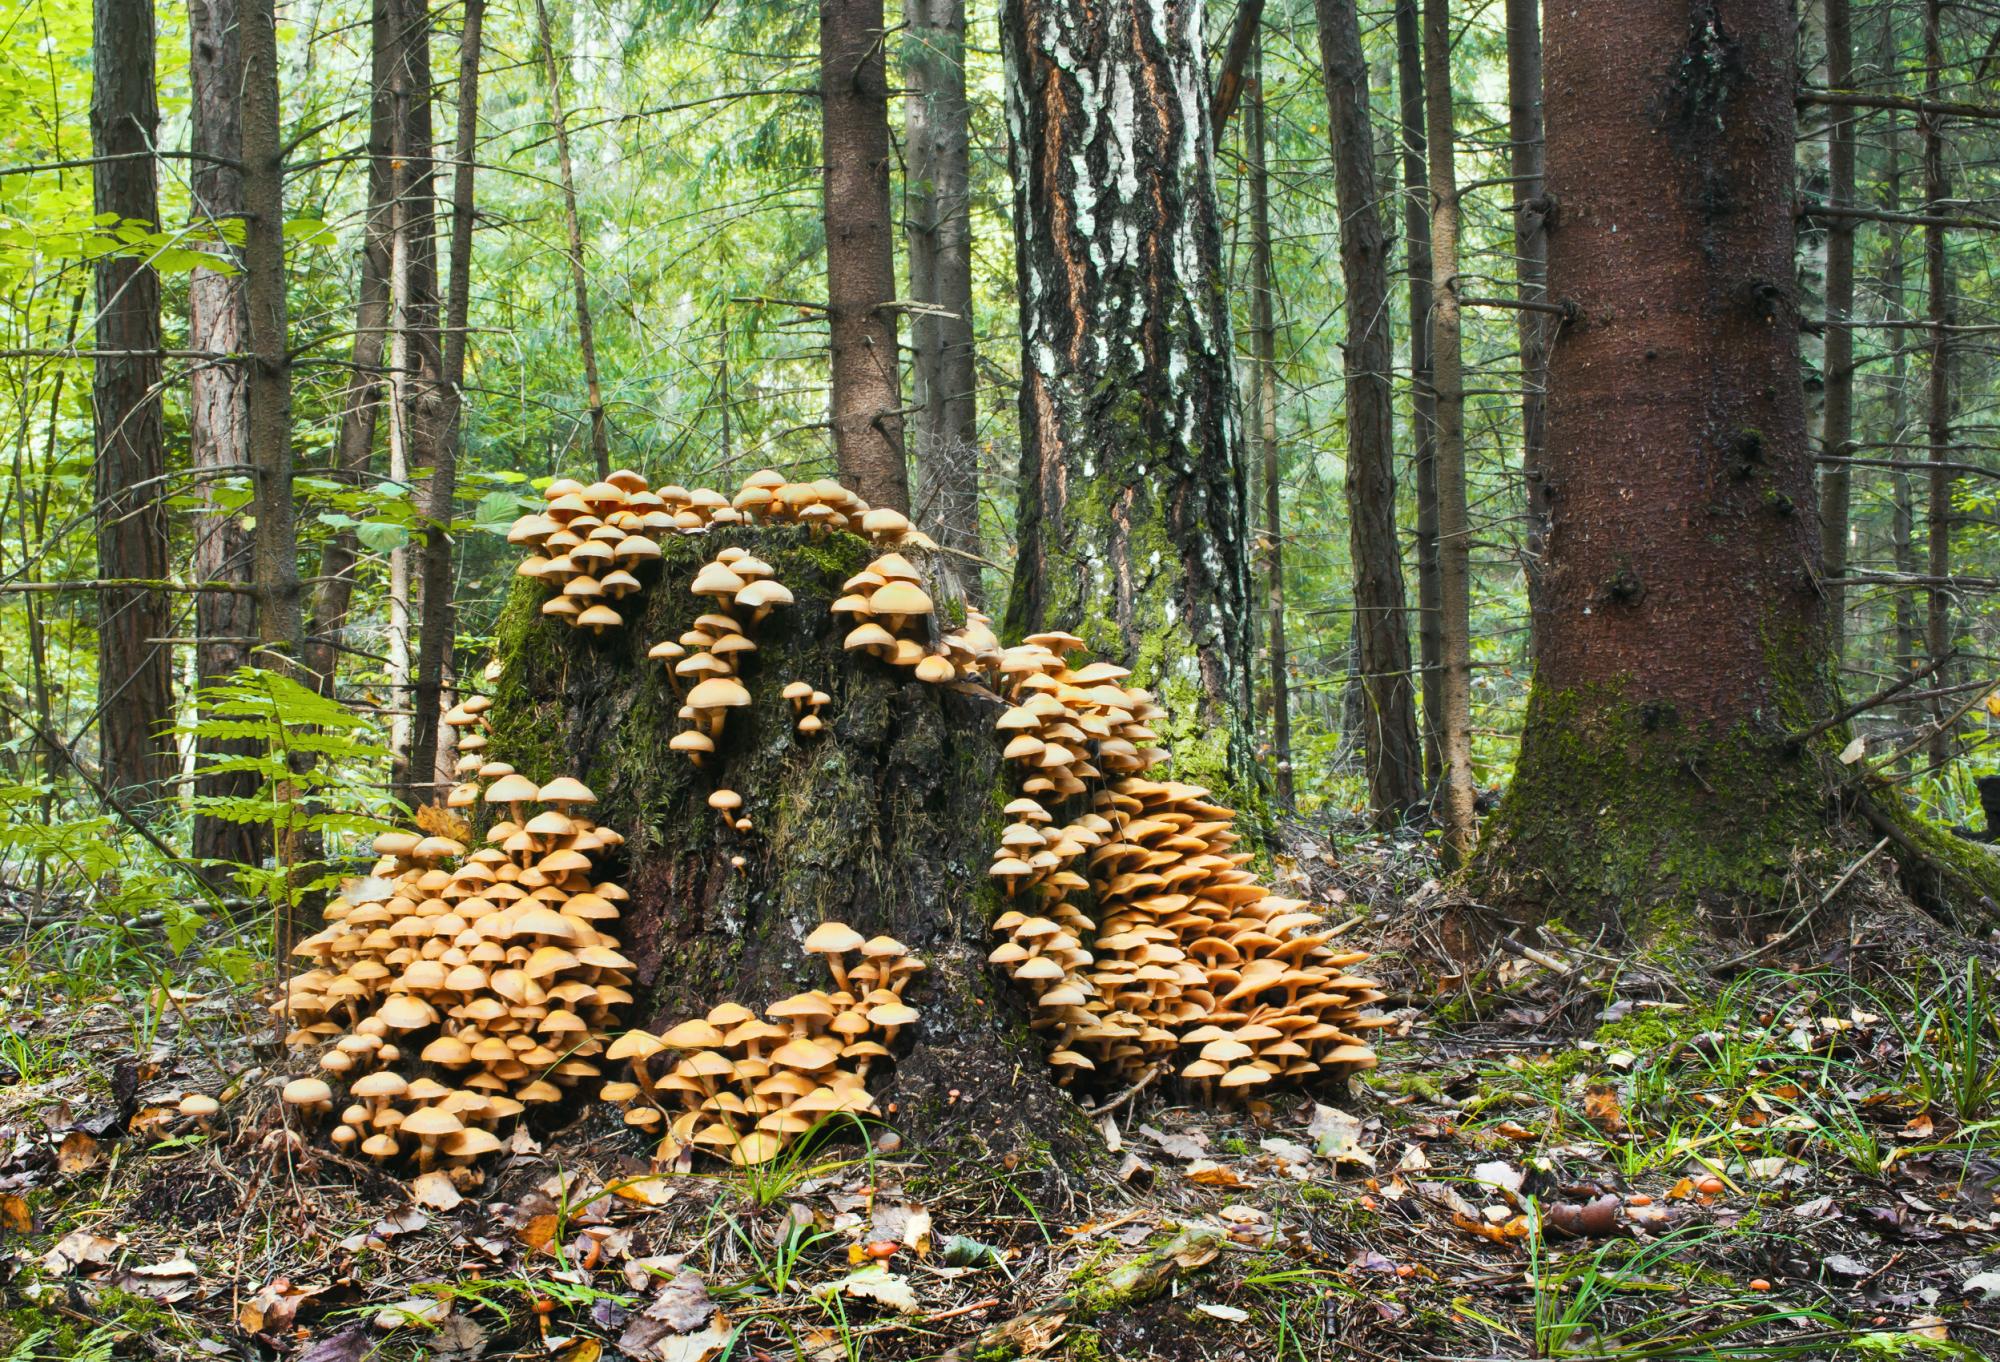 Sheathed woodtuft fungi on fallen tree